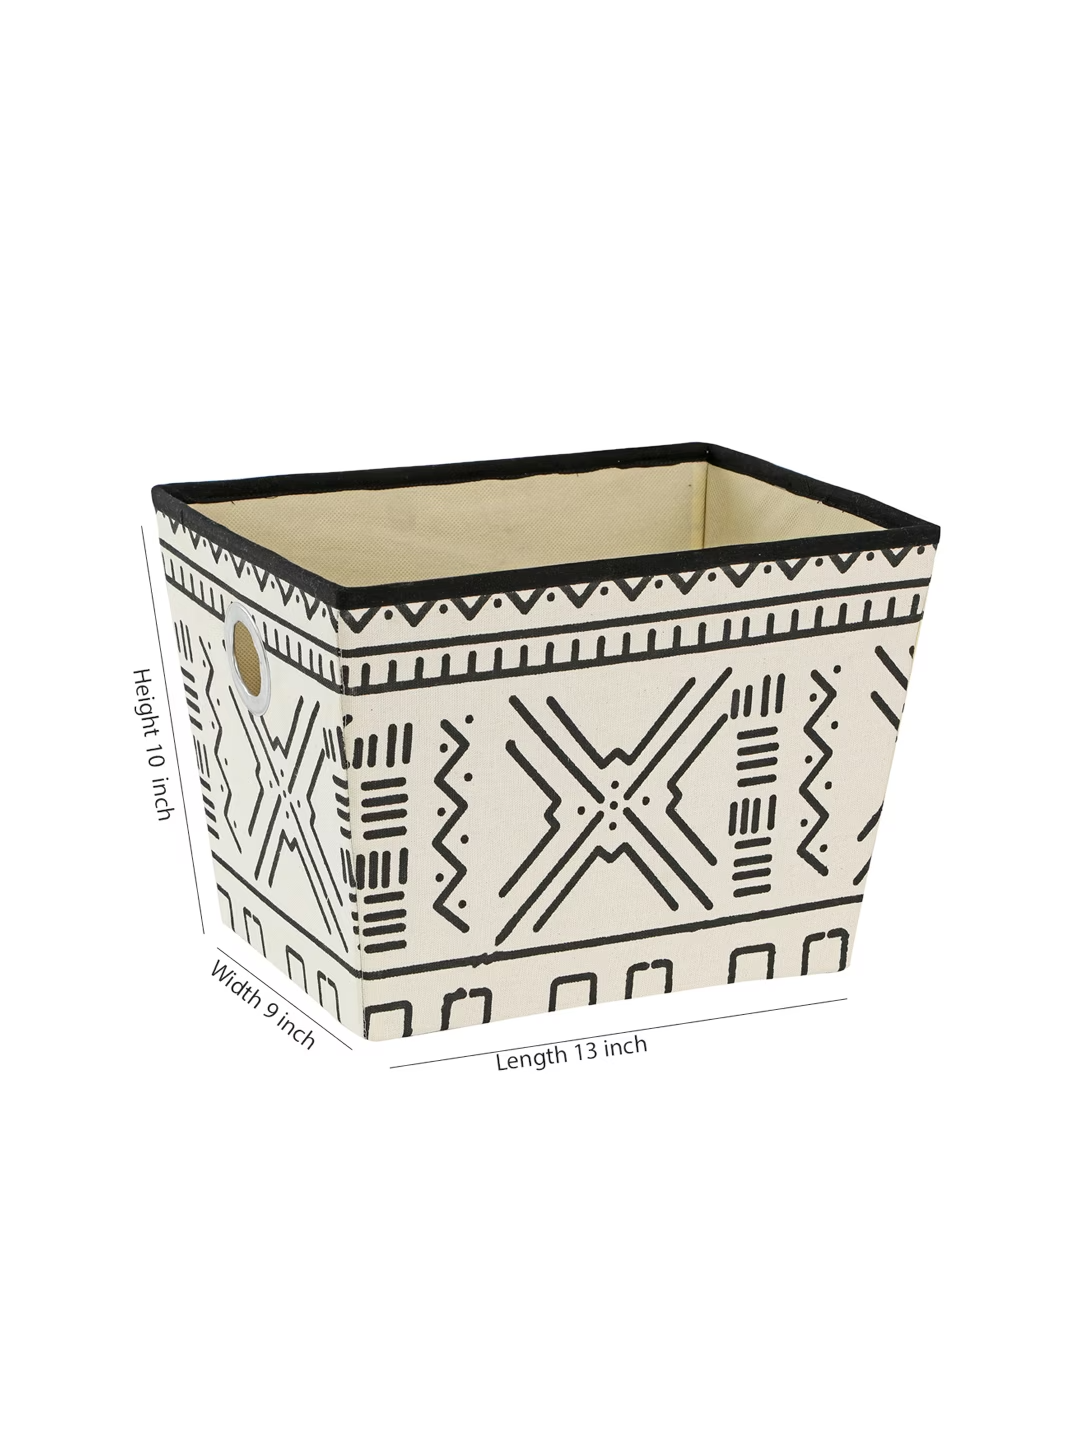 Off-White & Black Tribal Printed Tote Basket